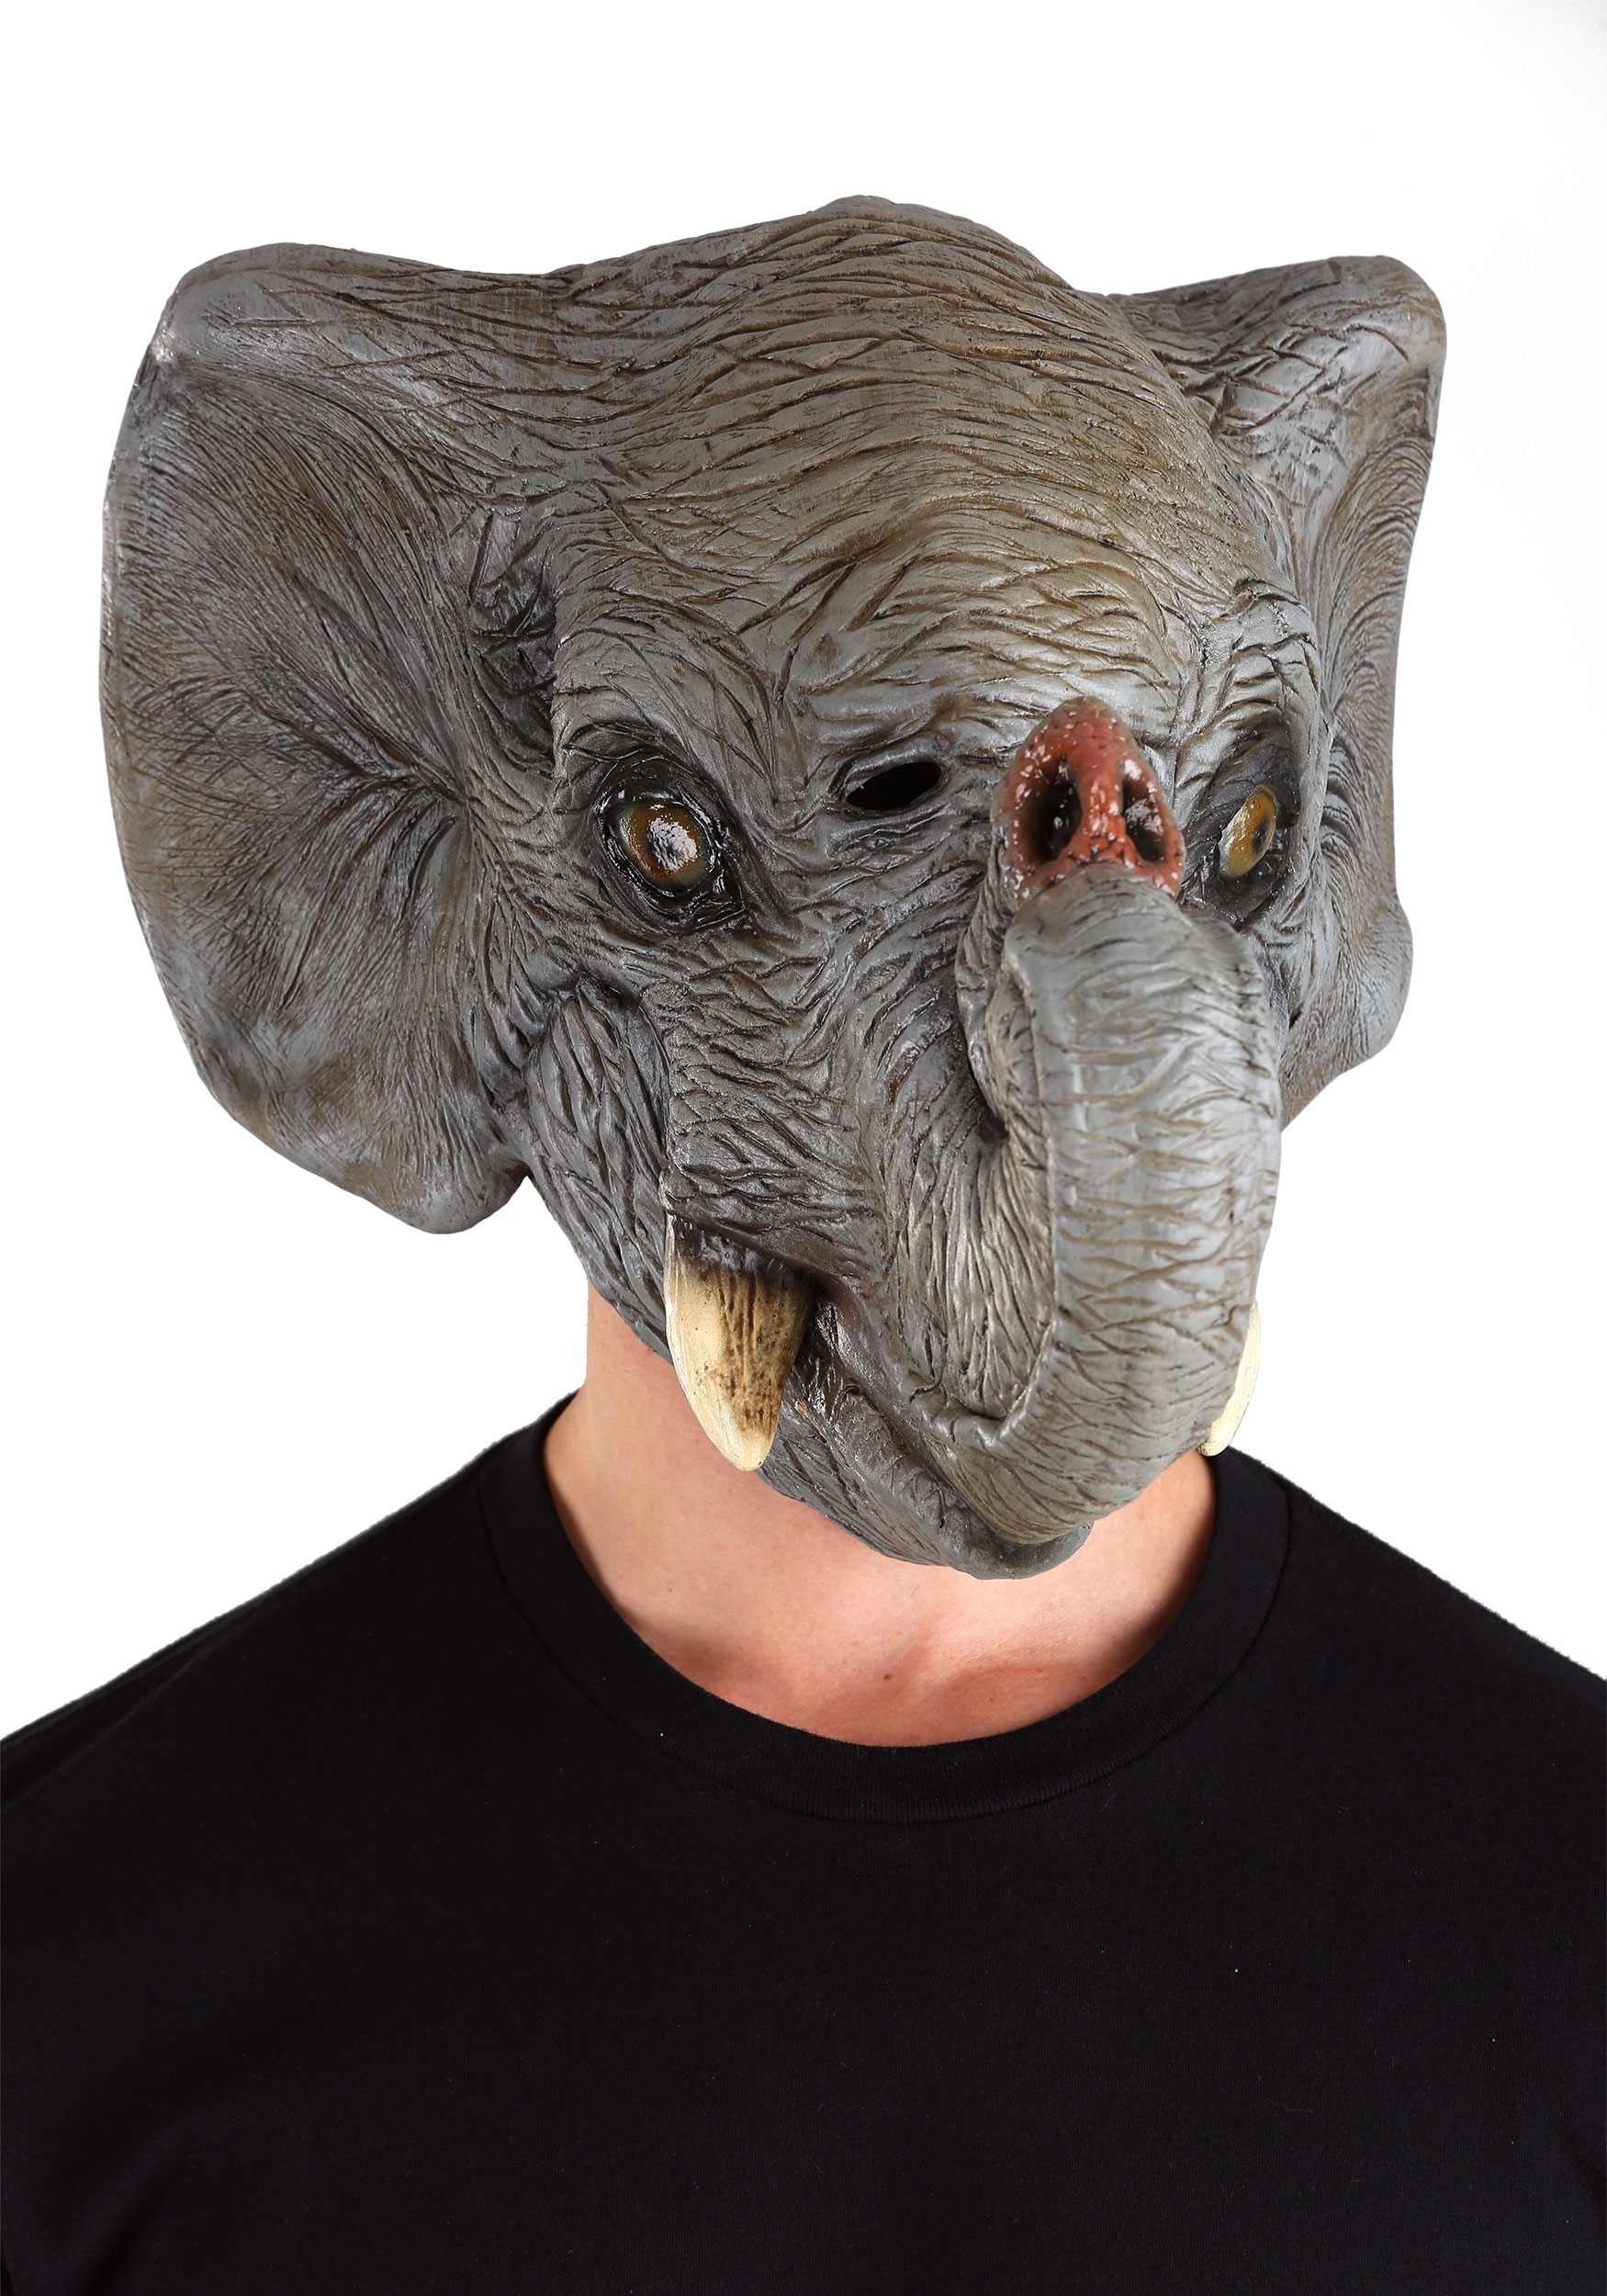 NEW Vivid Natural Latex Elephant Full Face Cosplay Halloween Mask Props LJ108 